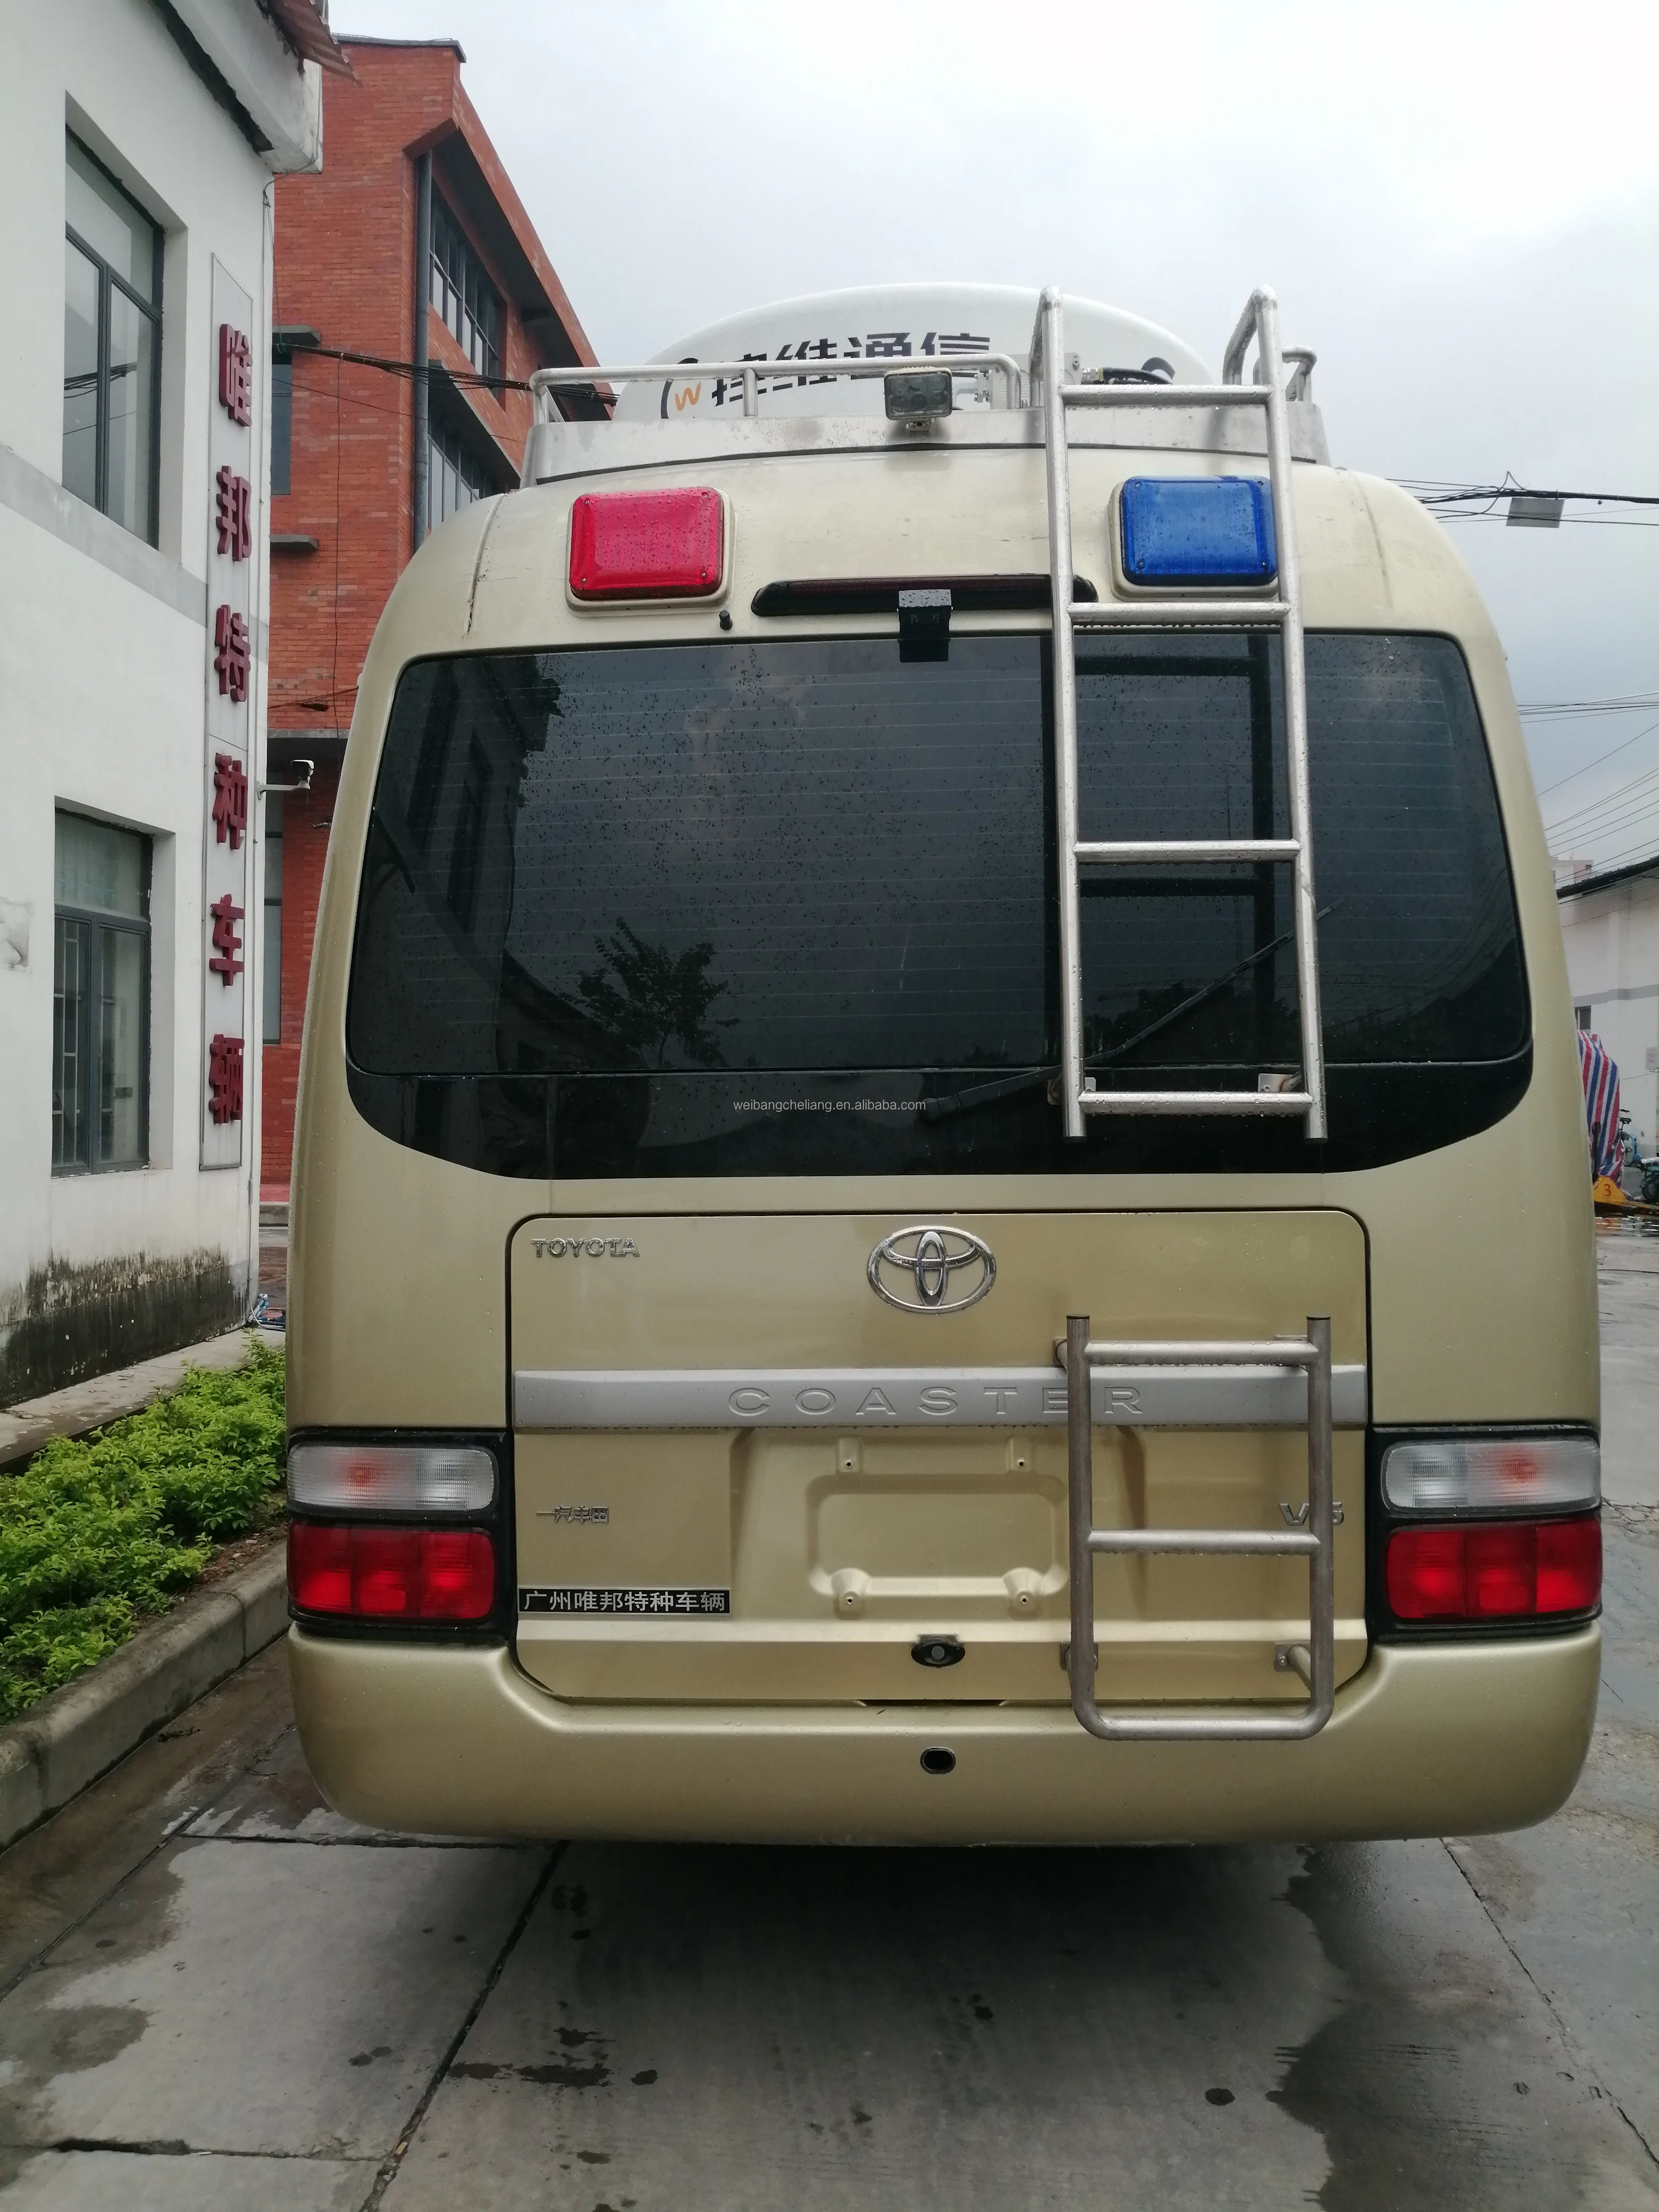 New Chinese Vehicles 4x4  Communication Command Vehicle Safety Car For Communication Command For Police